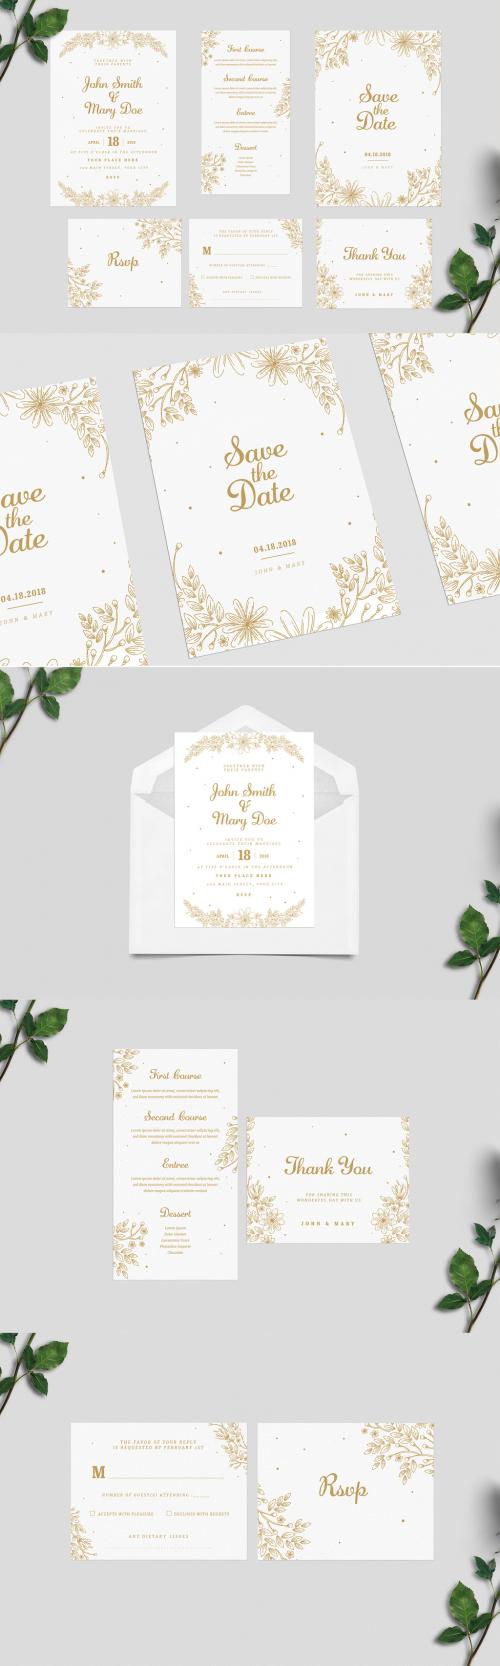 Adobe Stock - Gold Floral Wedding Invitation Set - 185617998